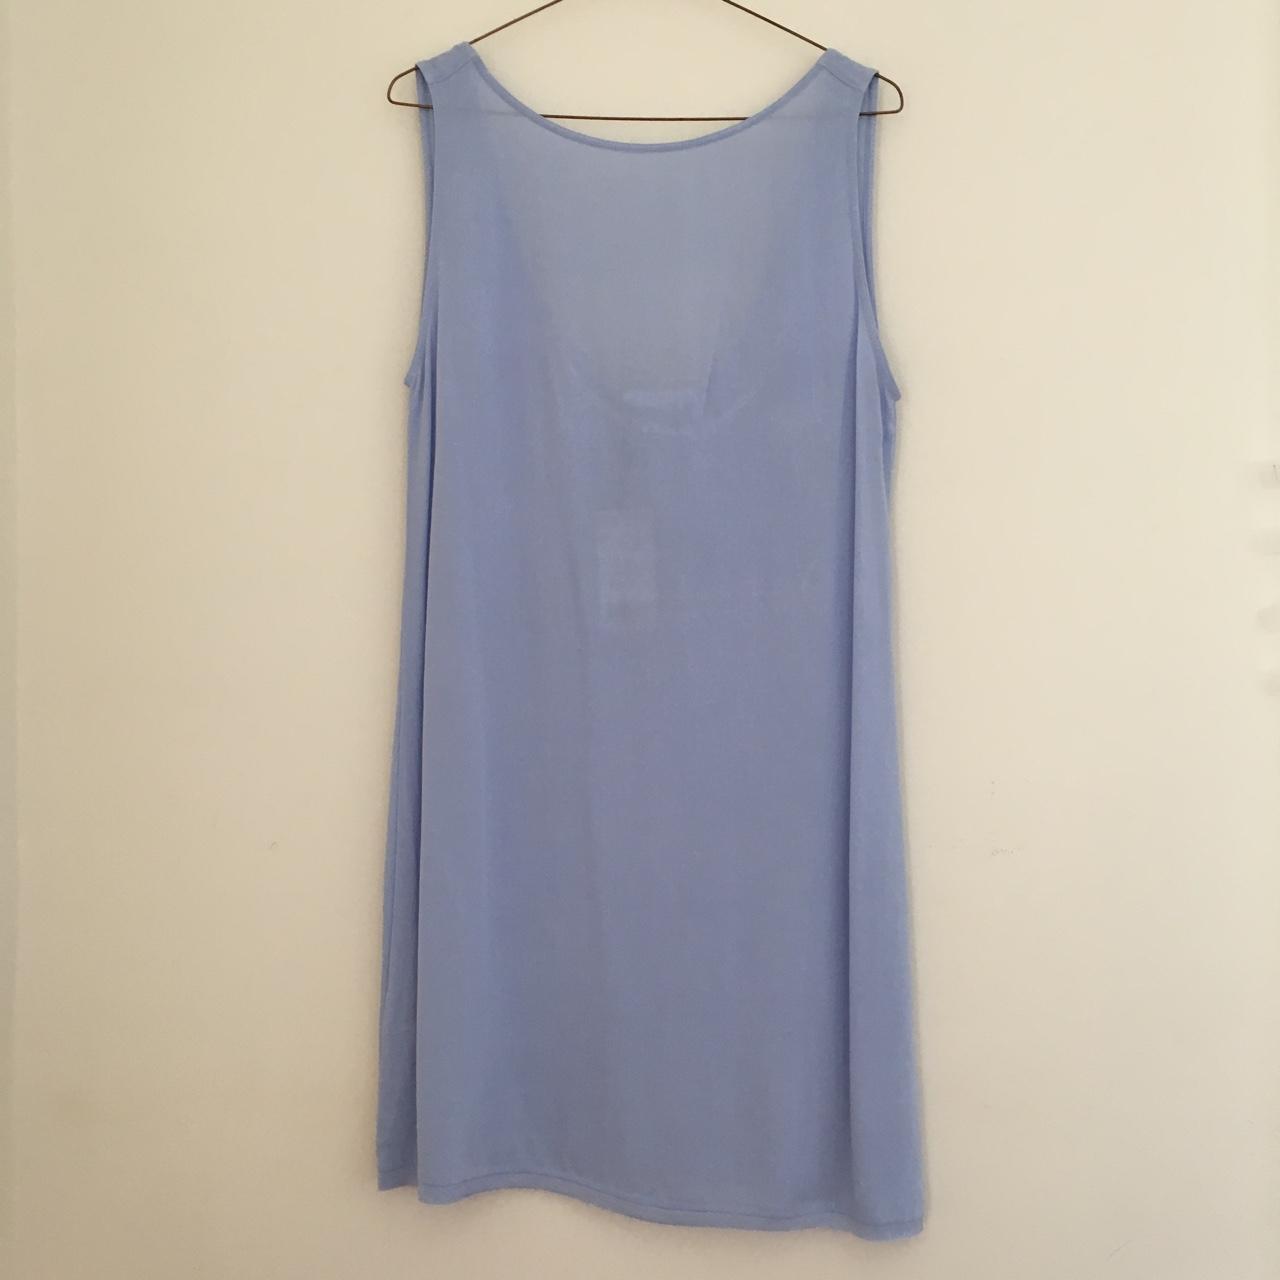 Mango light blue scoop back sleeveless dress • Never... - Depop